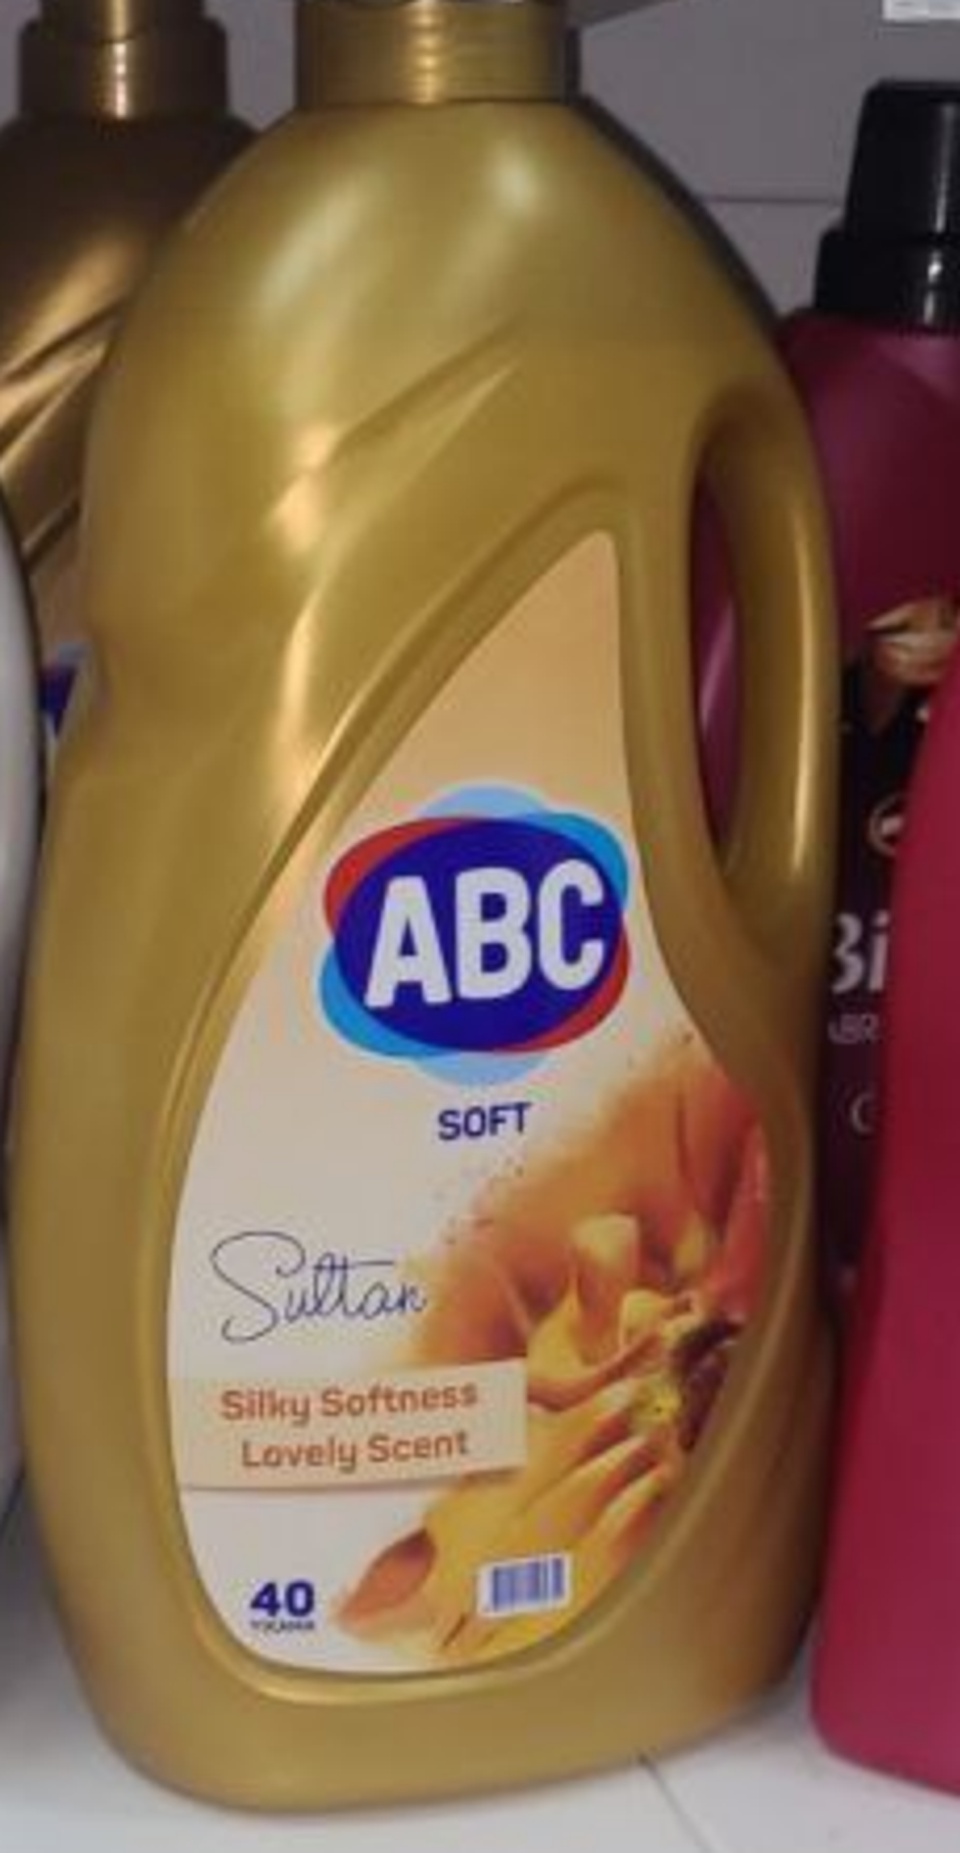 ABC Кондиционер золото 4 литра Sultan - 600 ₽, заказать онлайн.